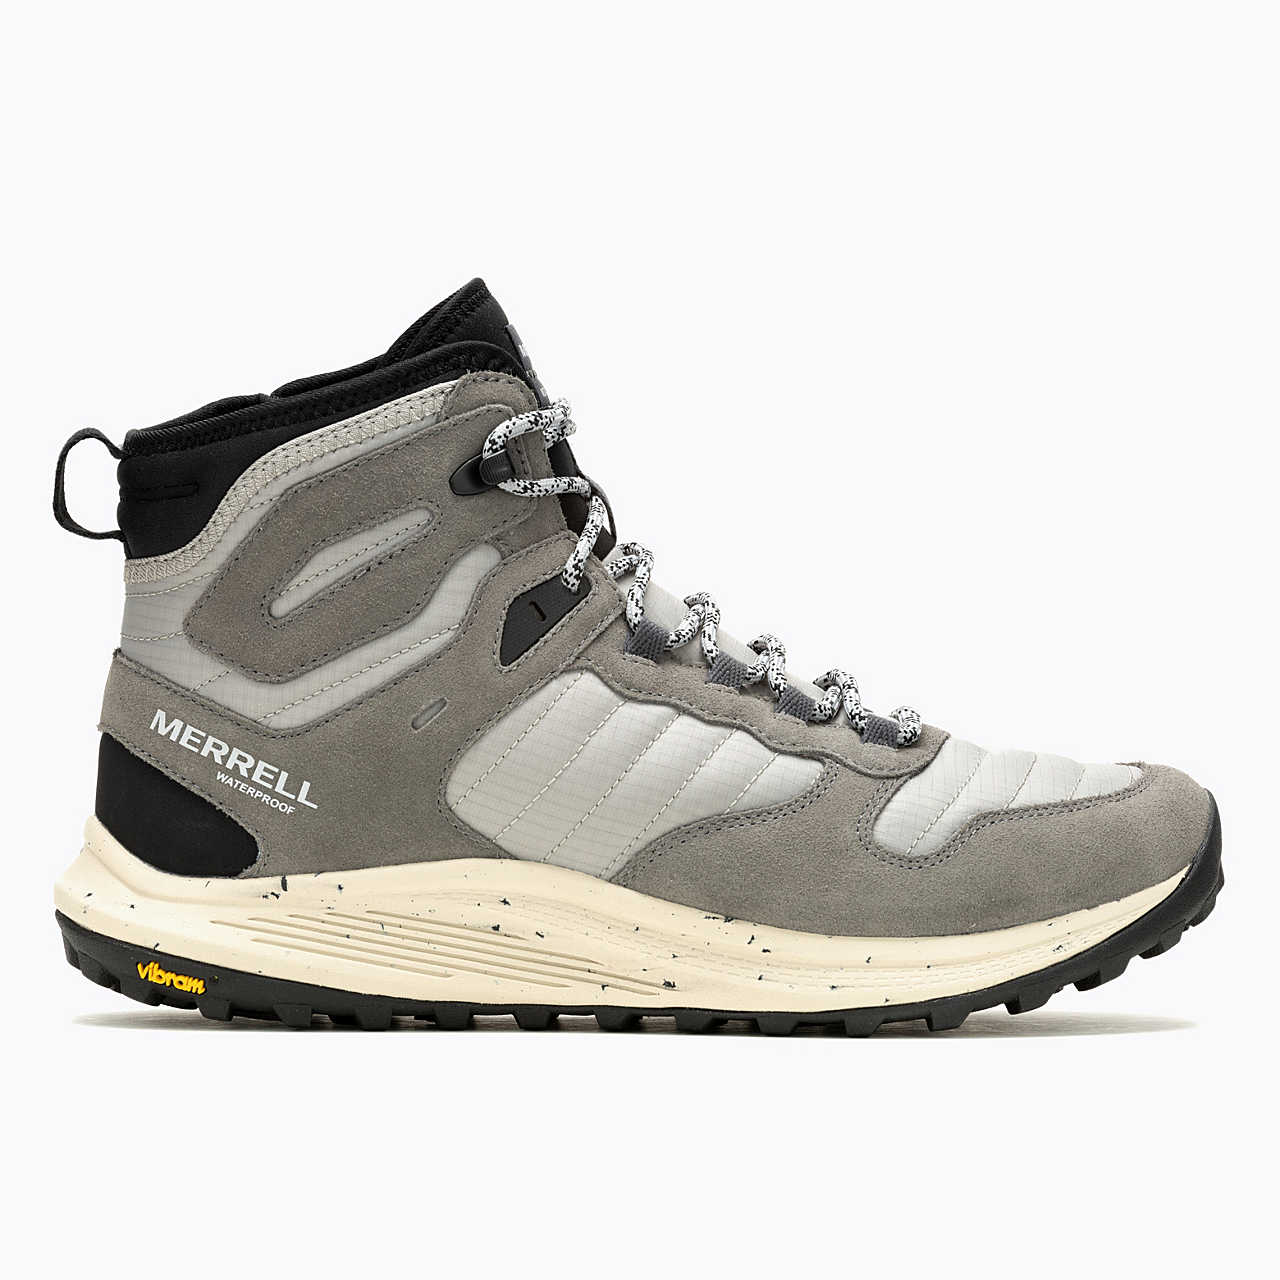 Shop All Winter Hiking Boots | Merrell